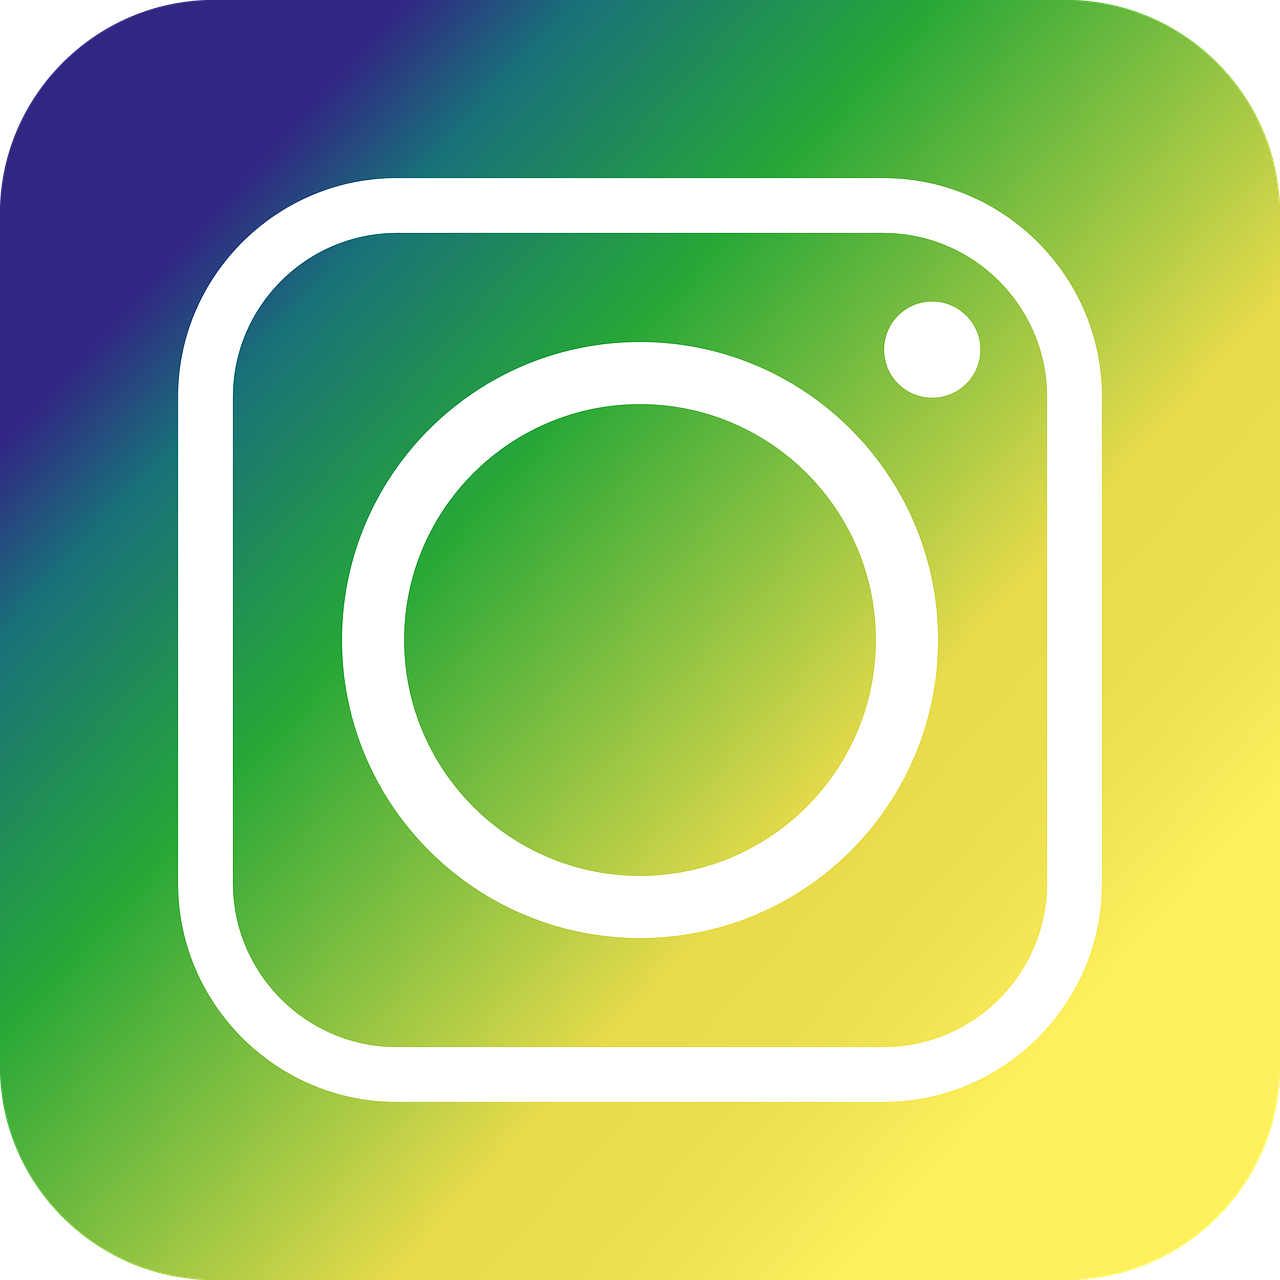 Instagram,icon,green,yellow,logo - free image from needpix.com